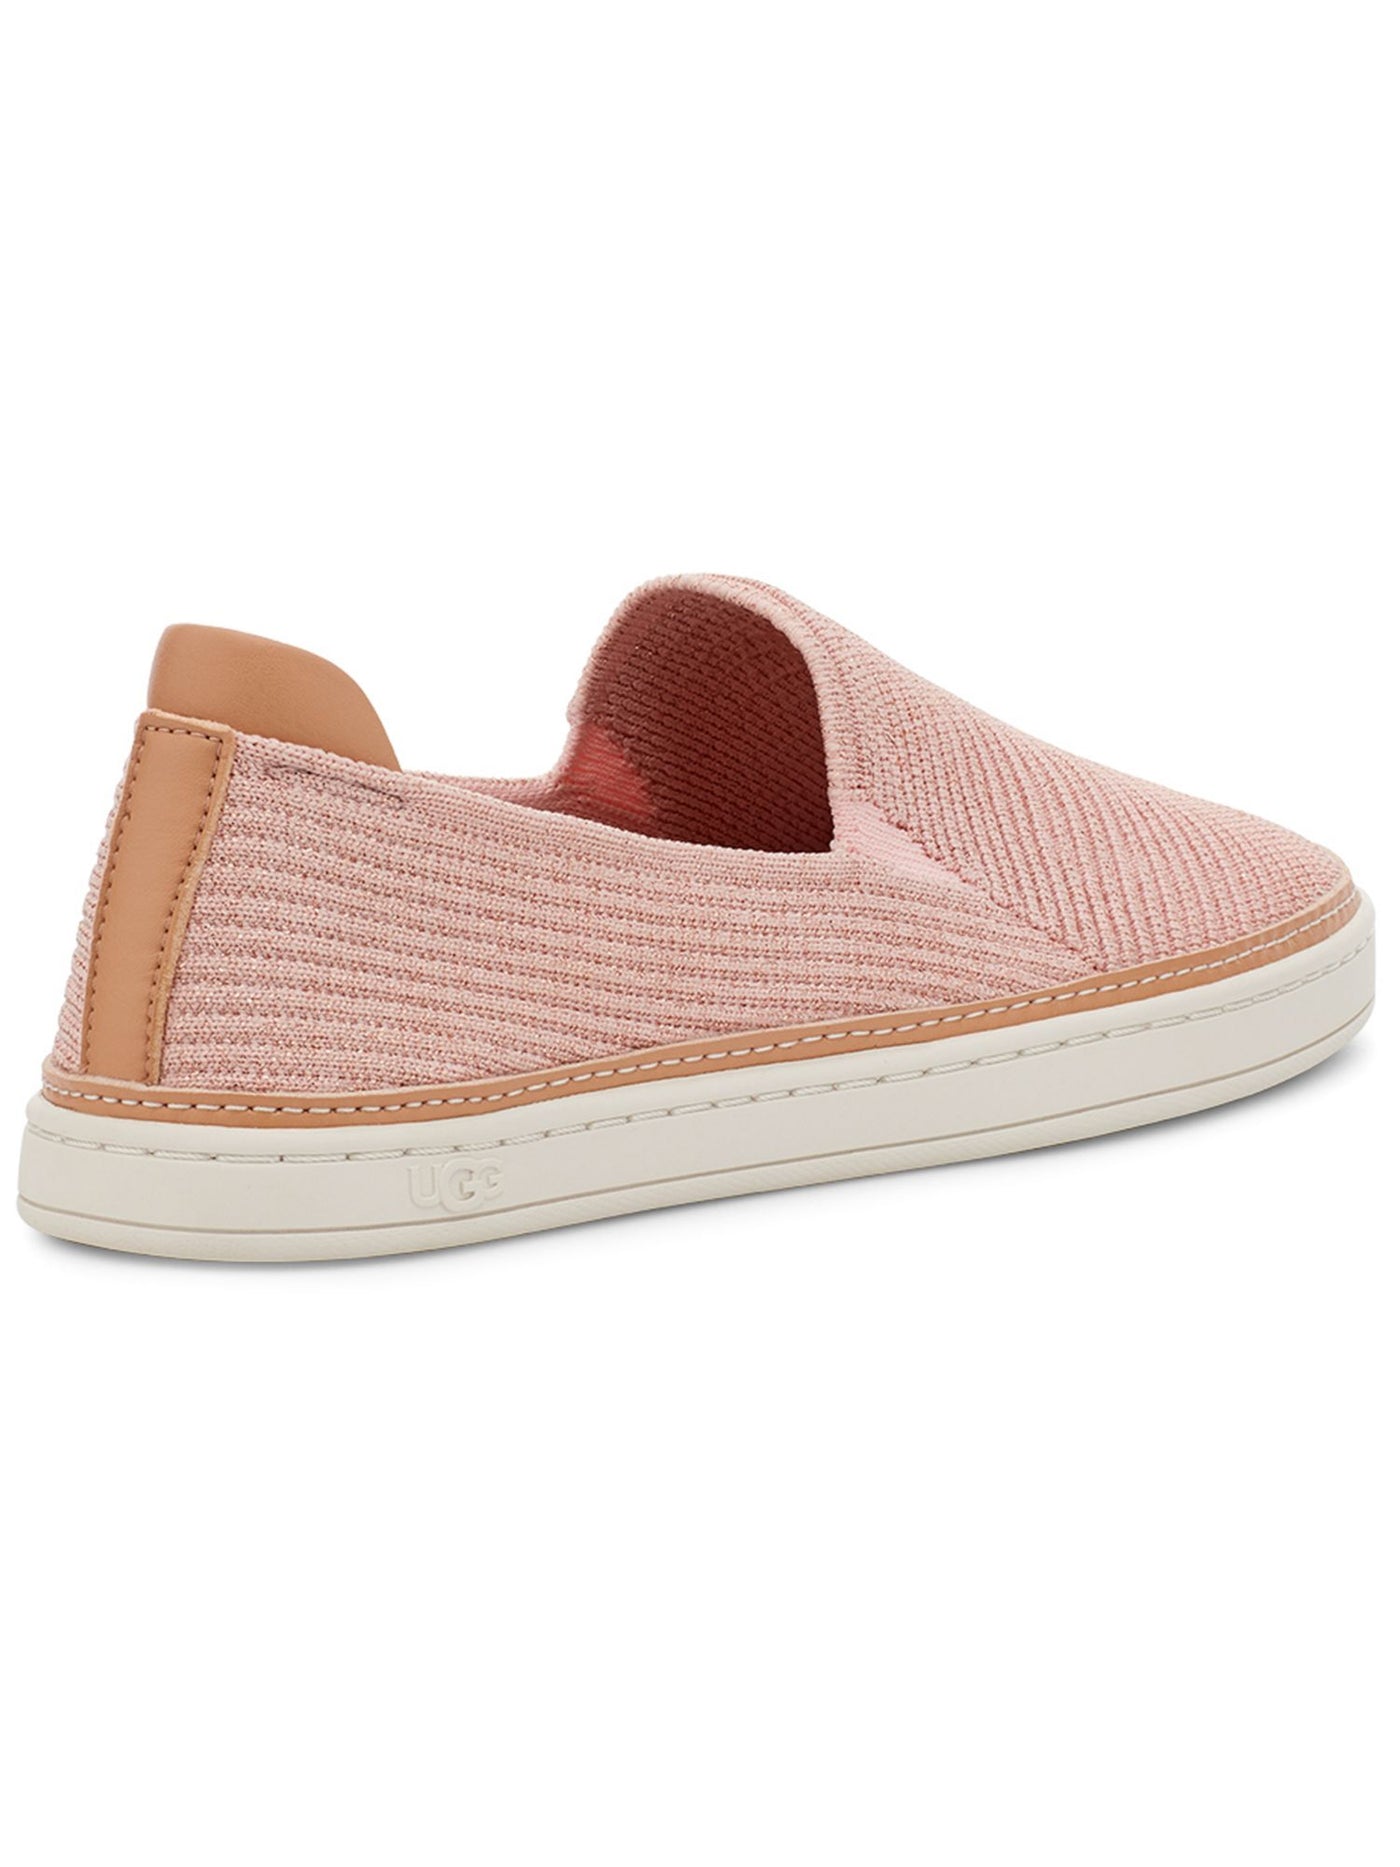 UGG Womens Pink Goring Glitter Comfort Sammy Round Toe Platform Slip On Sneakers 6.5